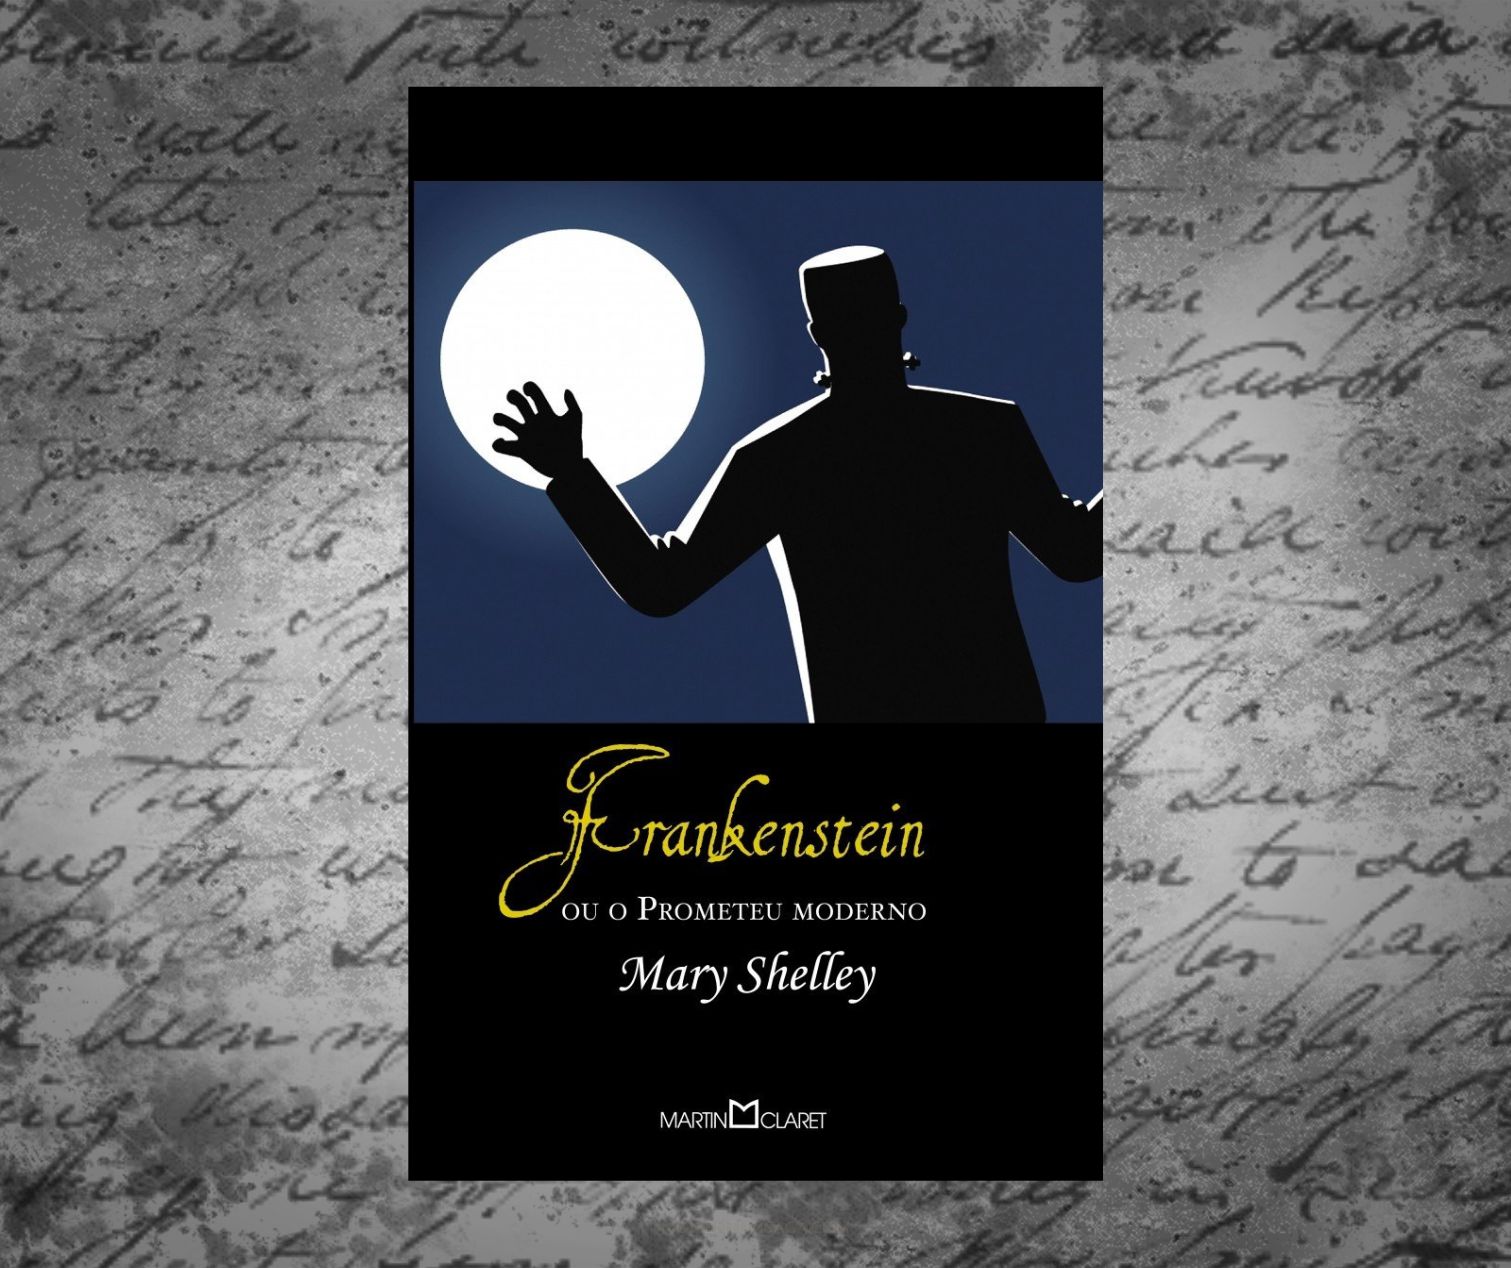 Resenha: Frankenstein, de Mary Shelley